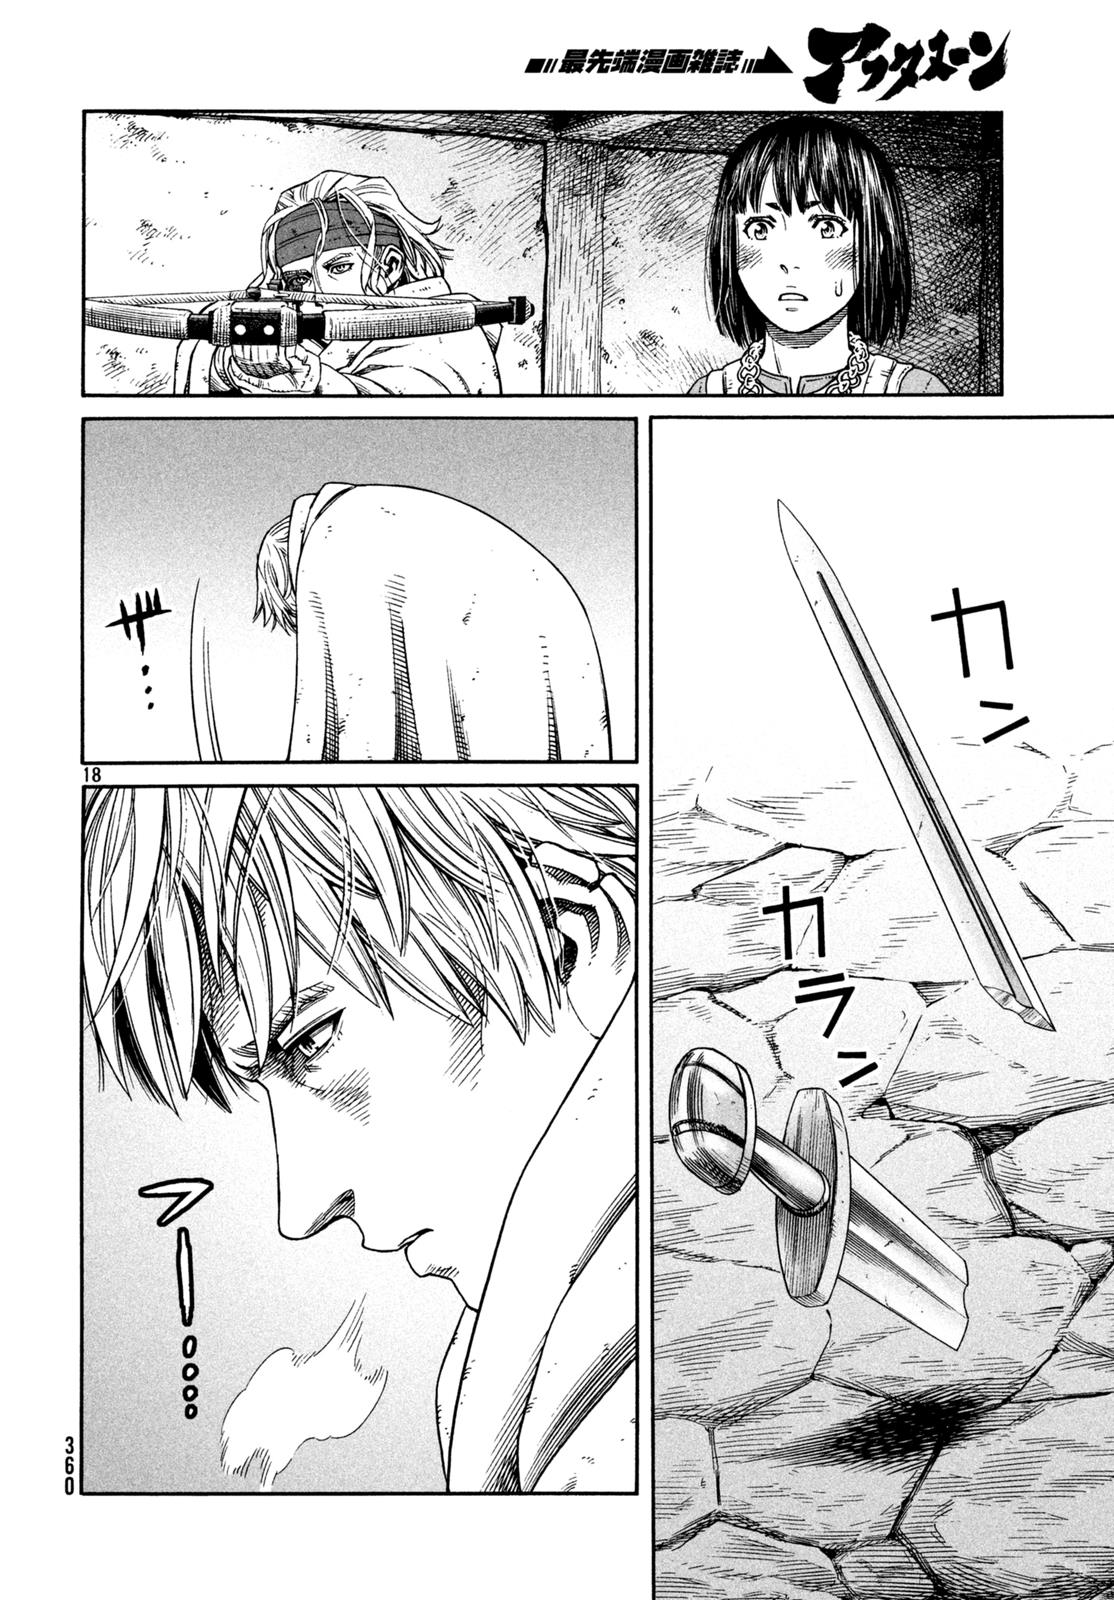 Vinland Saga Manga Manga Chapter - 149 - image 18